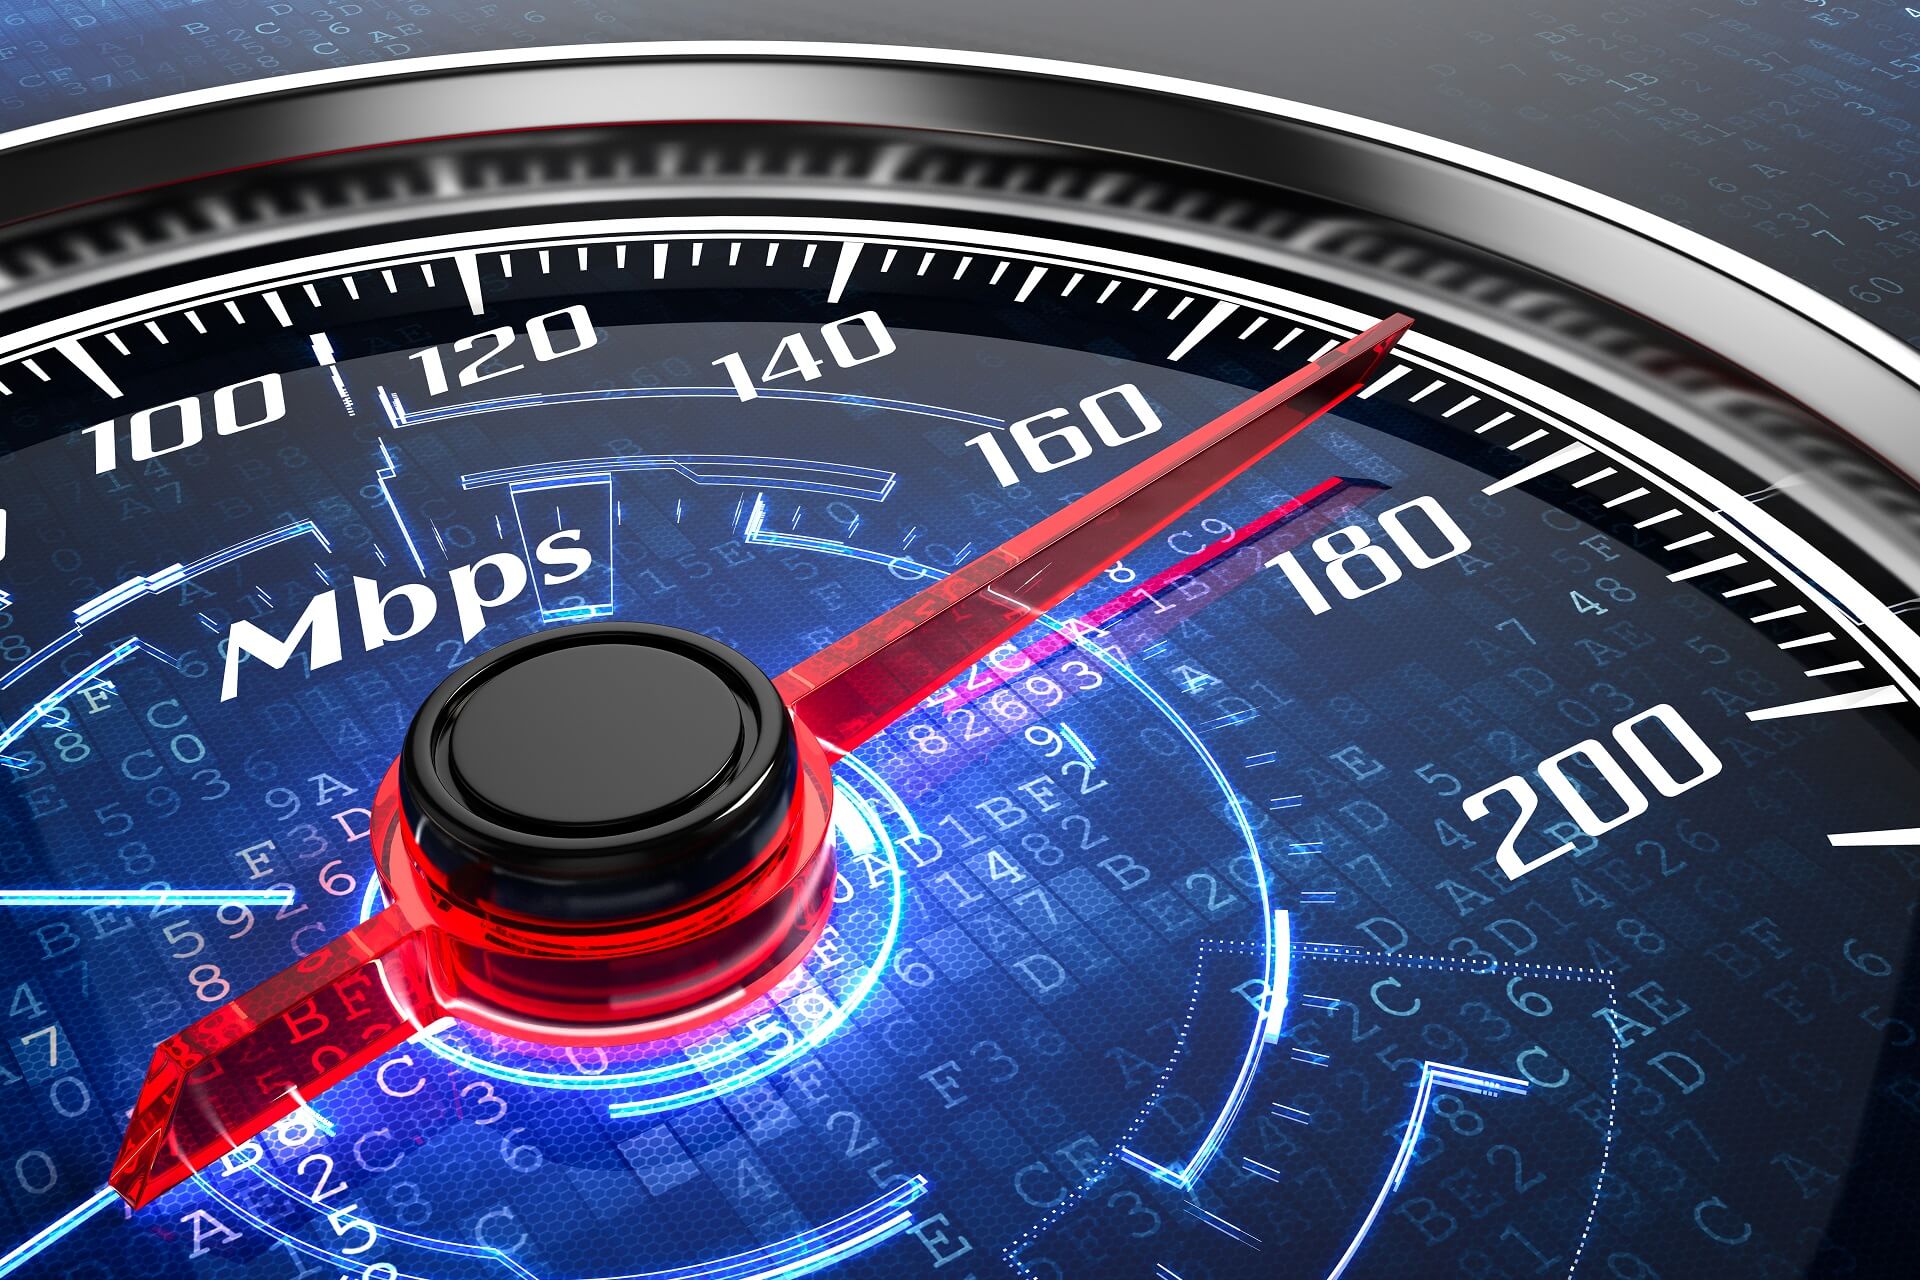 faster download speed windows 10